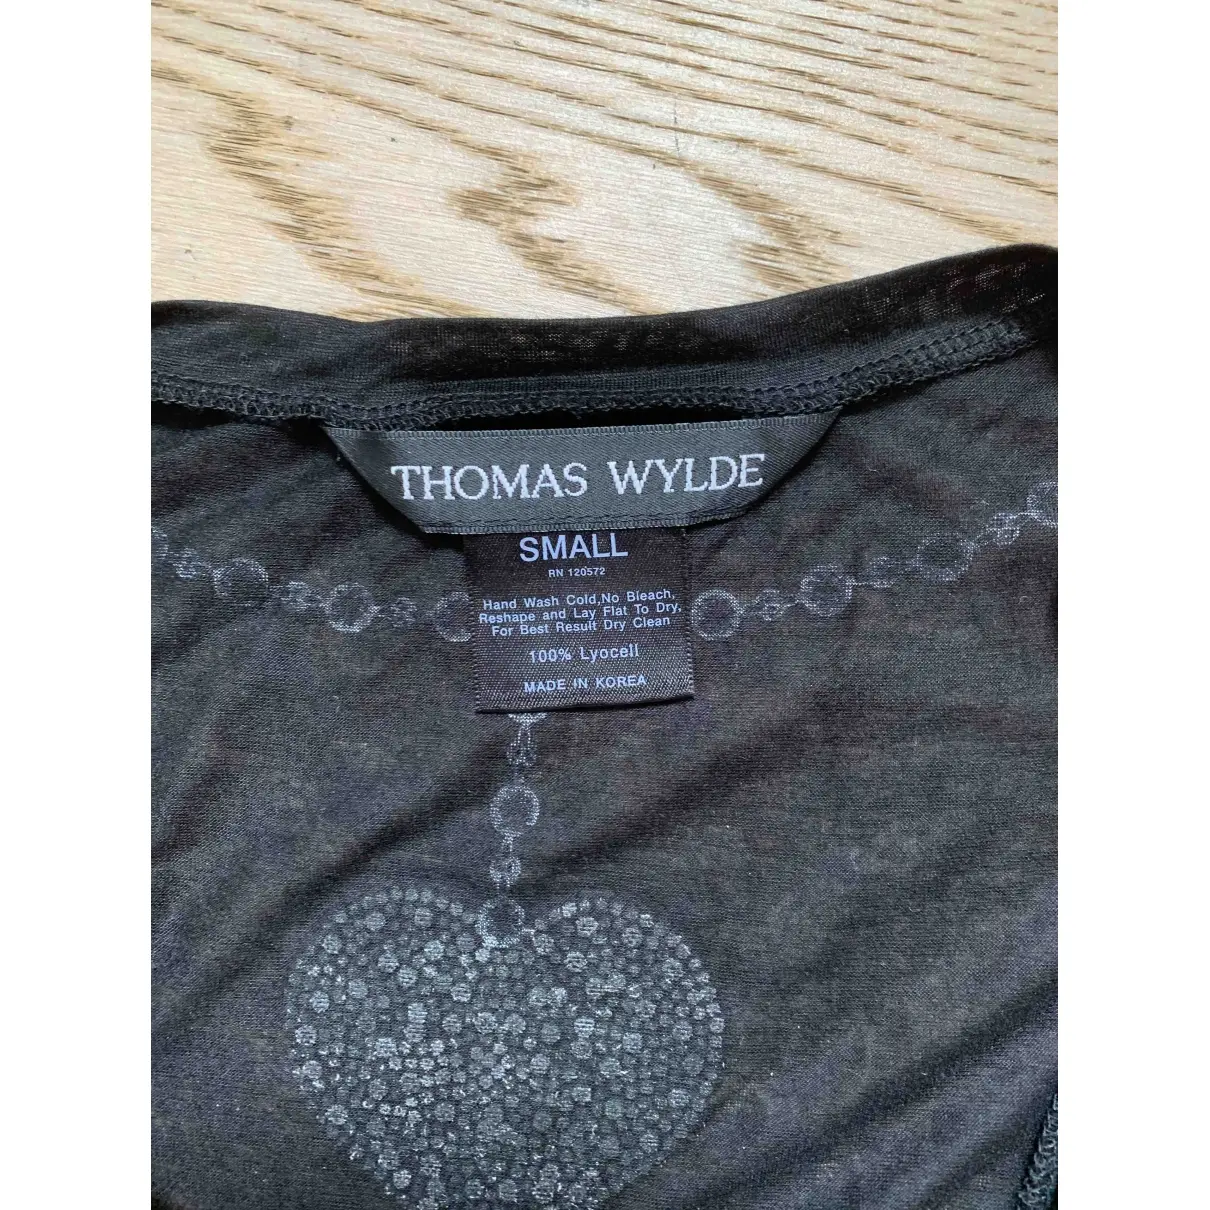 Buy Thomas Wylde Tunic online